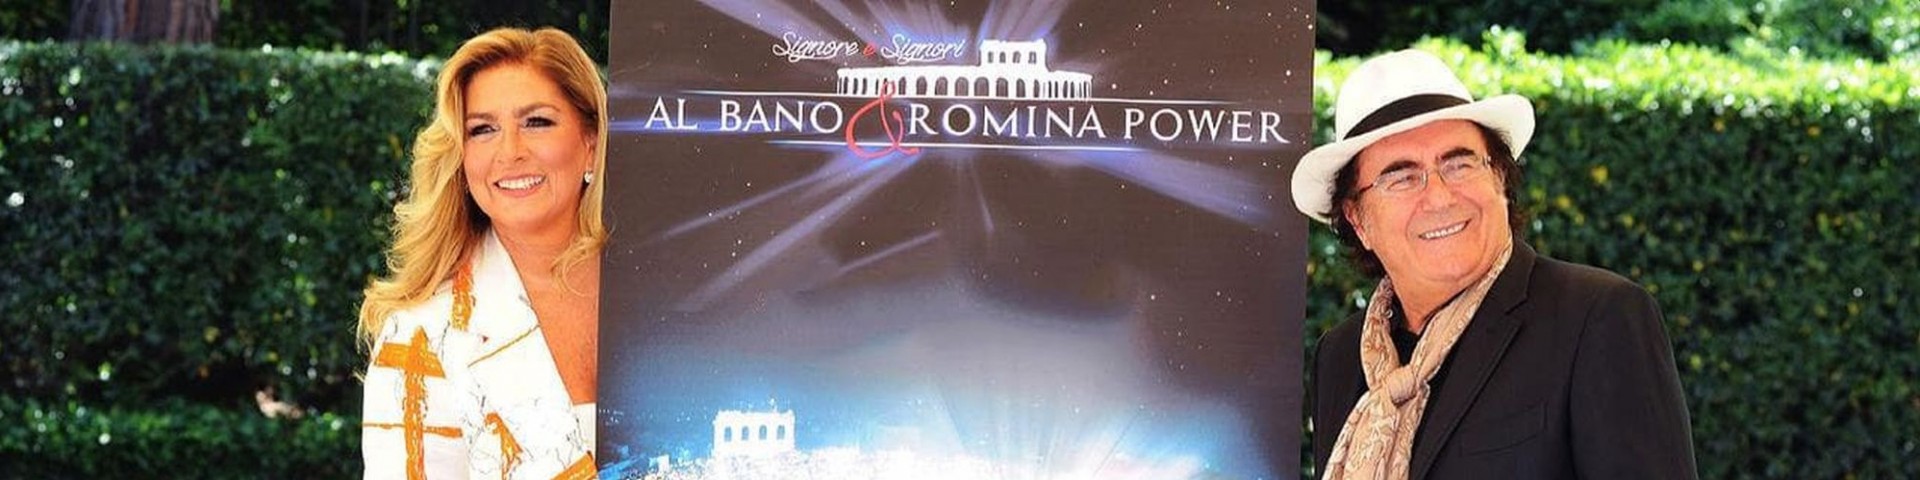 Signore e signori: Al Bano e Romina Power a Verona